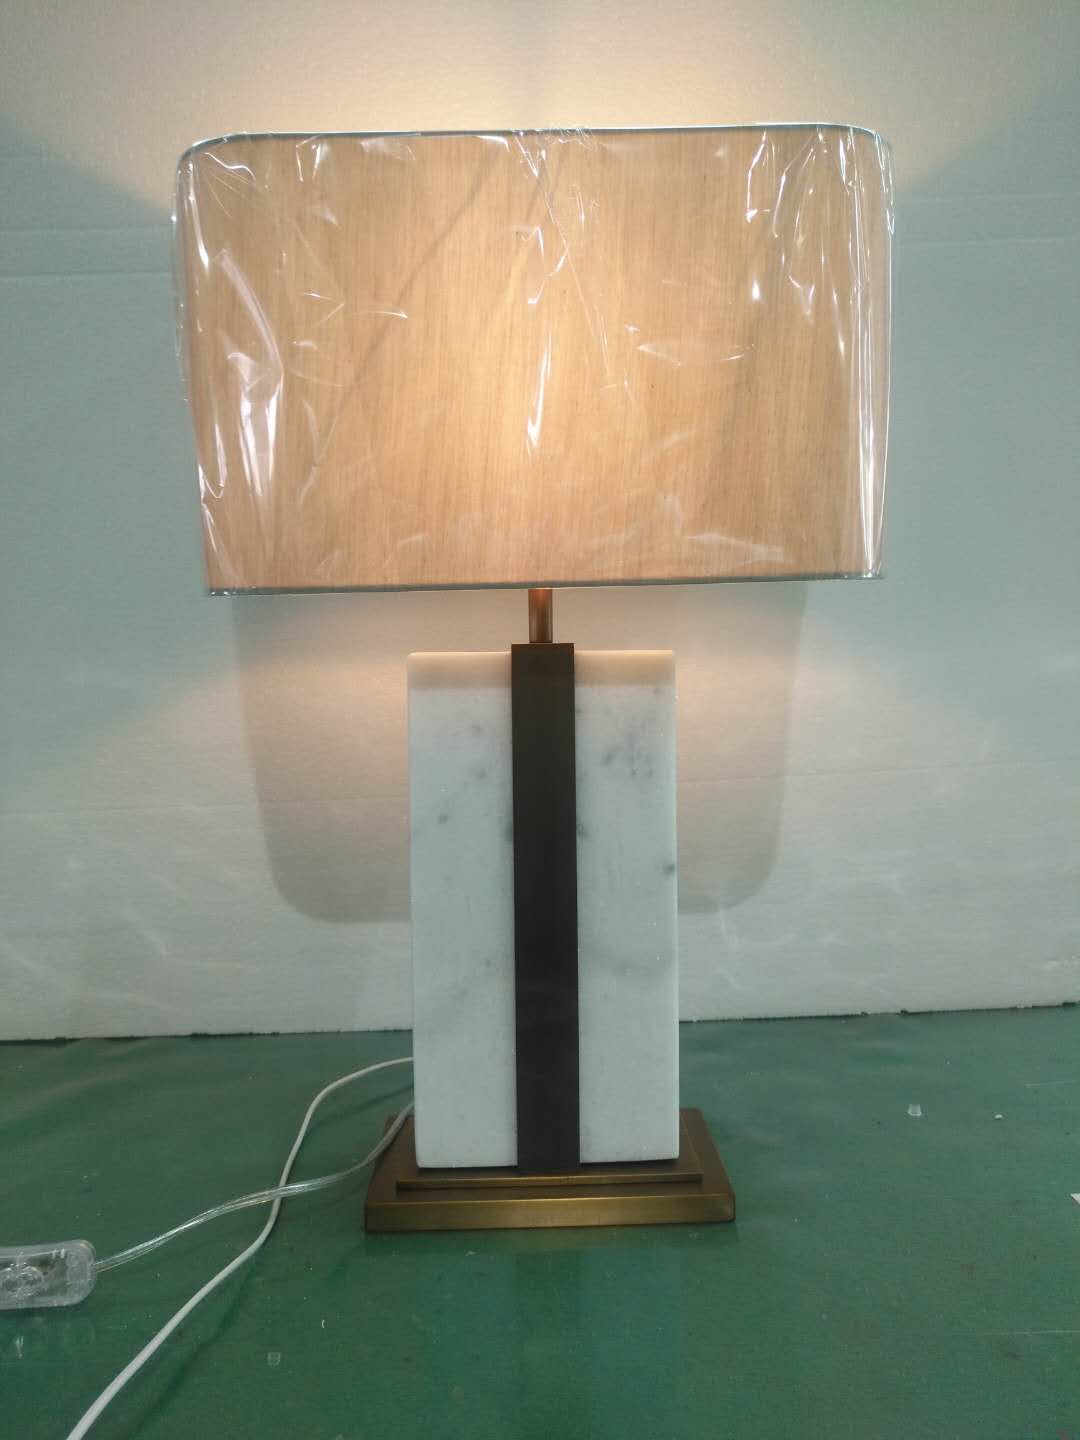 Indoor White Stainless Steel Fabric Shade Table Lighting (KA827827)